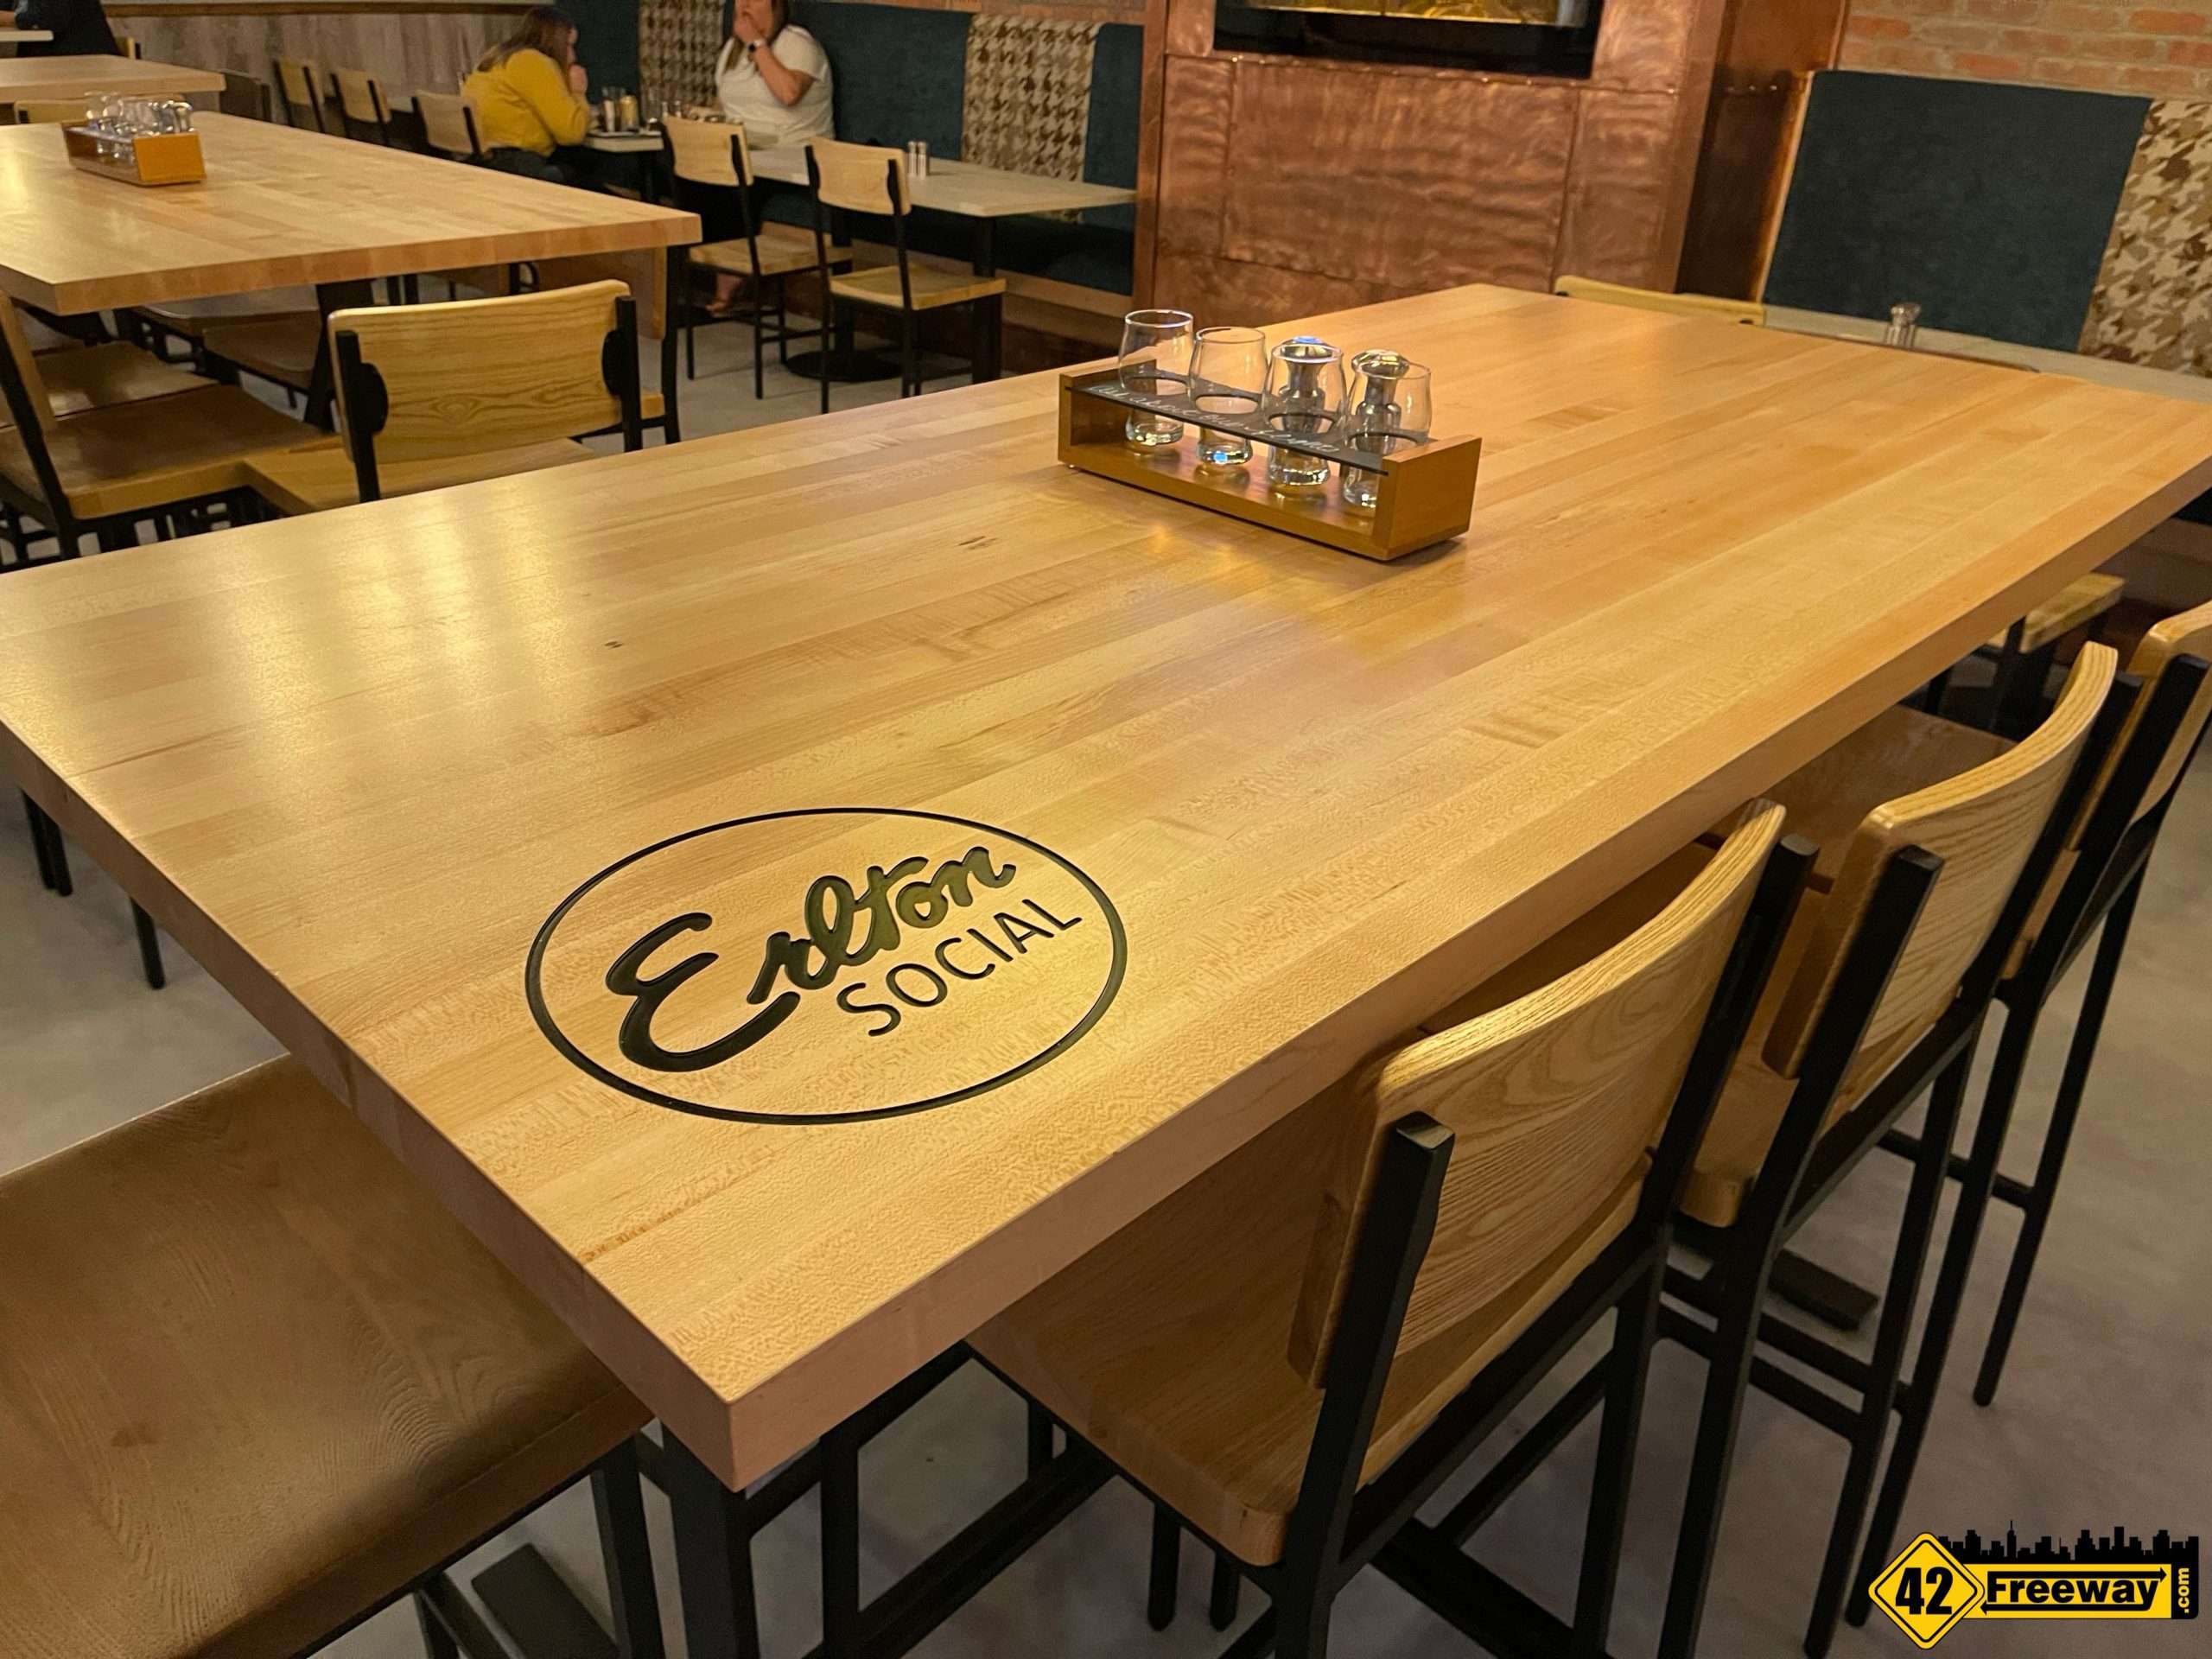 erlton social craft bar and kitchen